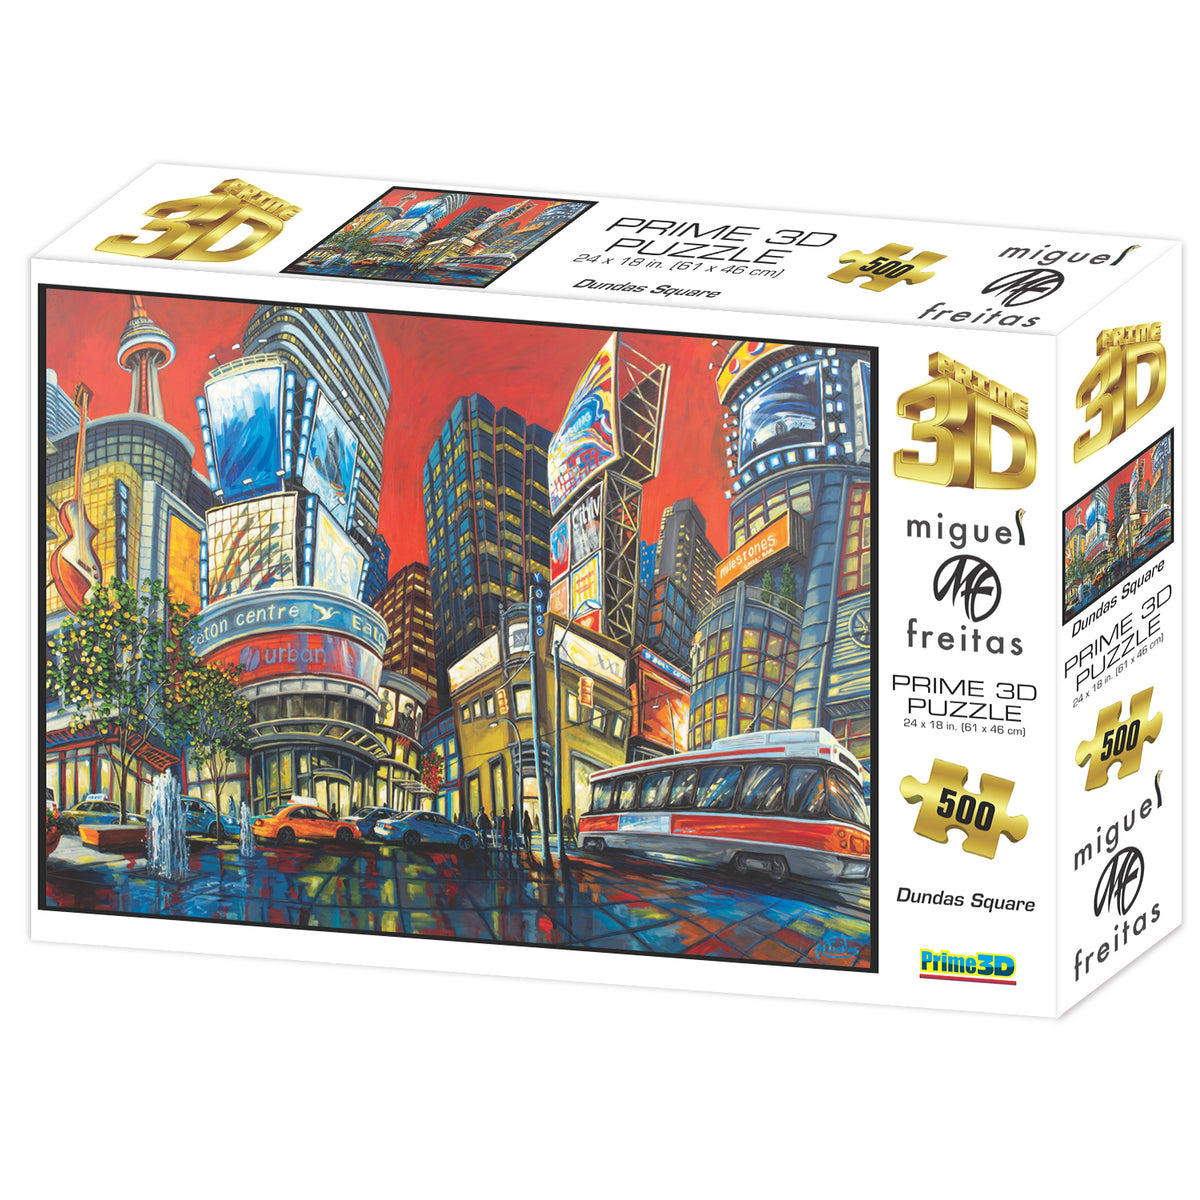 10453 | Dundas Square, Toronto Miguel Freitas 3D Jigsaw Puzzle 10453 500pc 24x18"